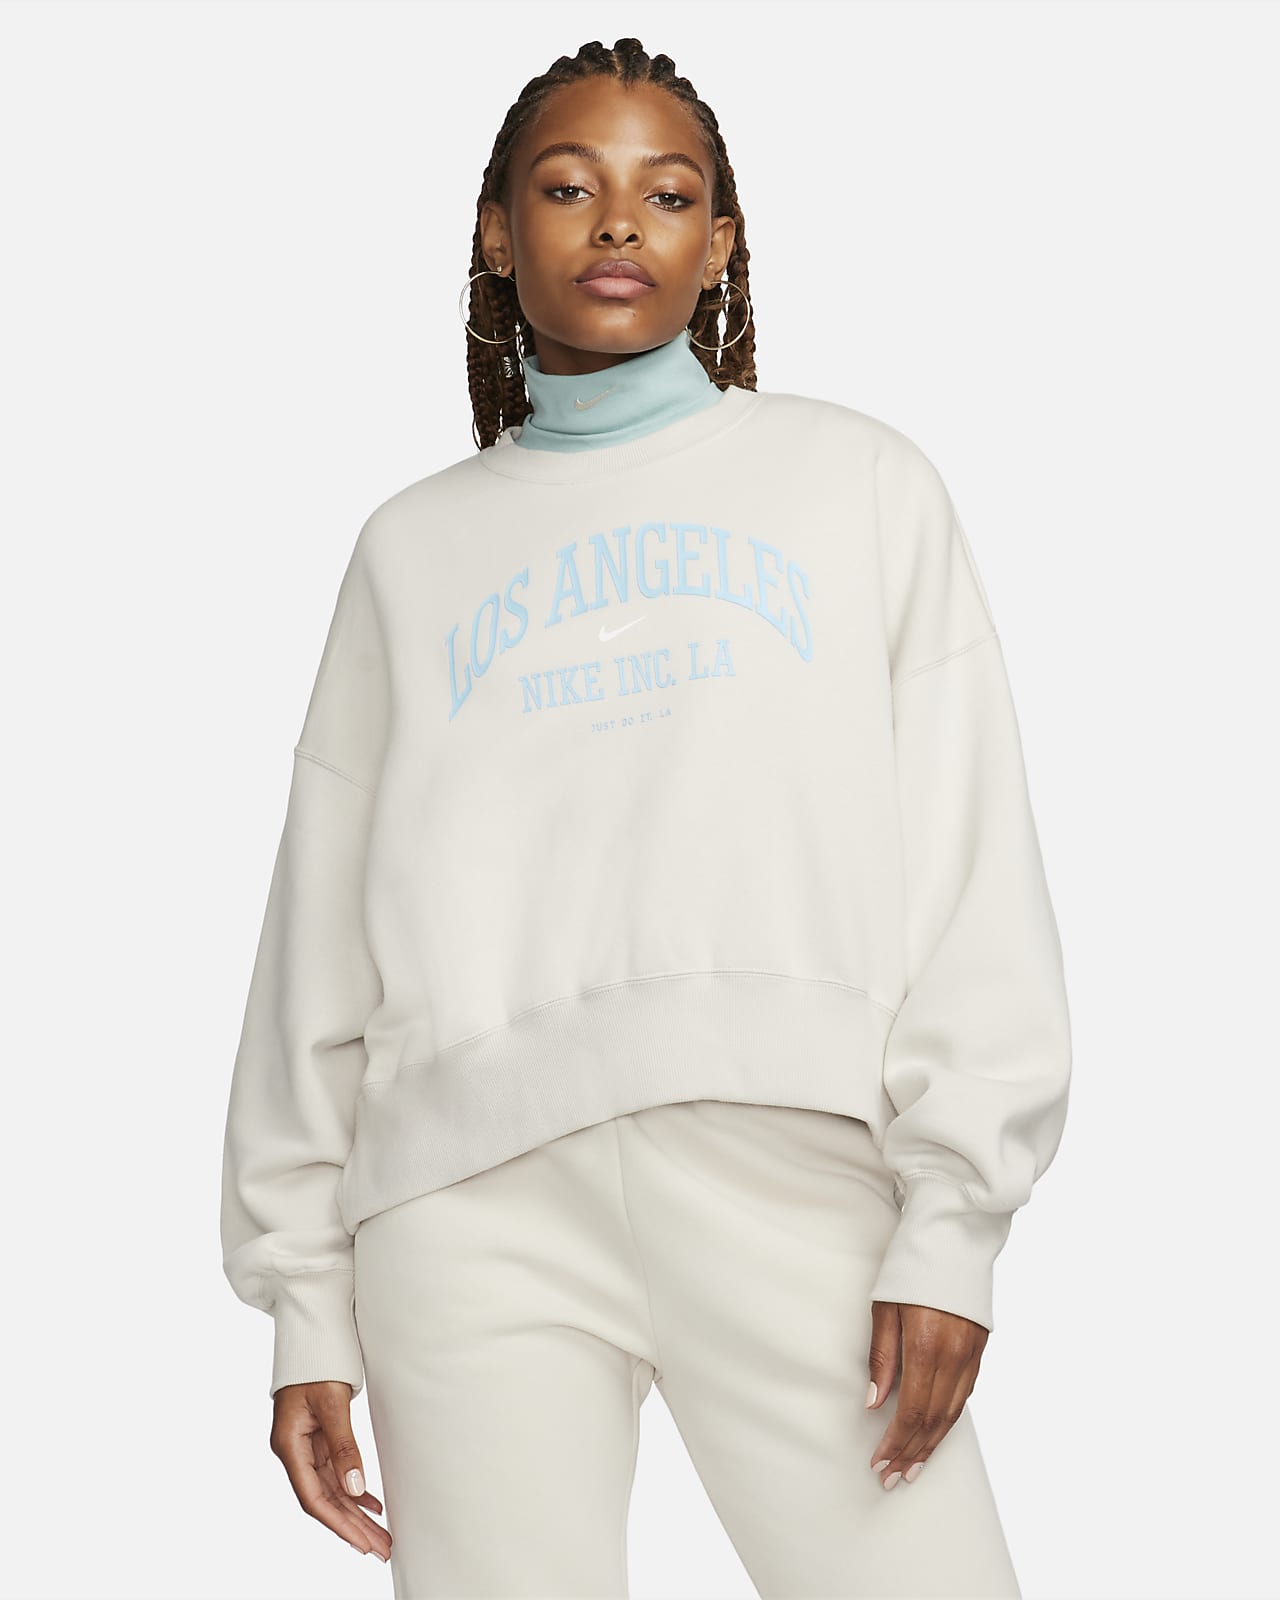 Nike Sportswear Phoenix Fleece Women's Over-Oversized Crew-Neck Graphic  Sweatshirt.